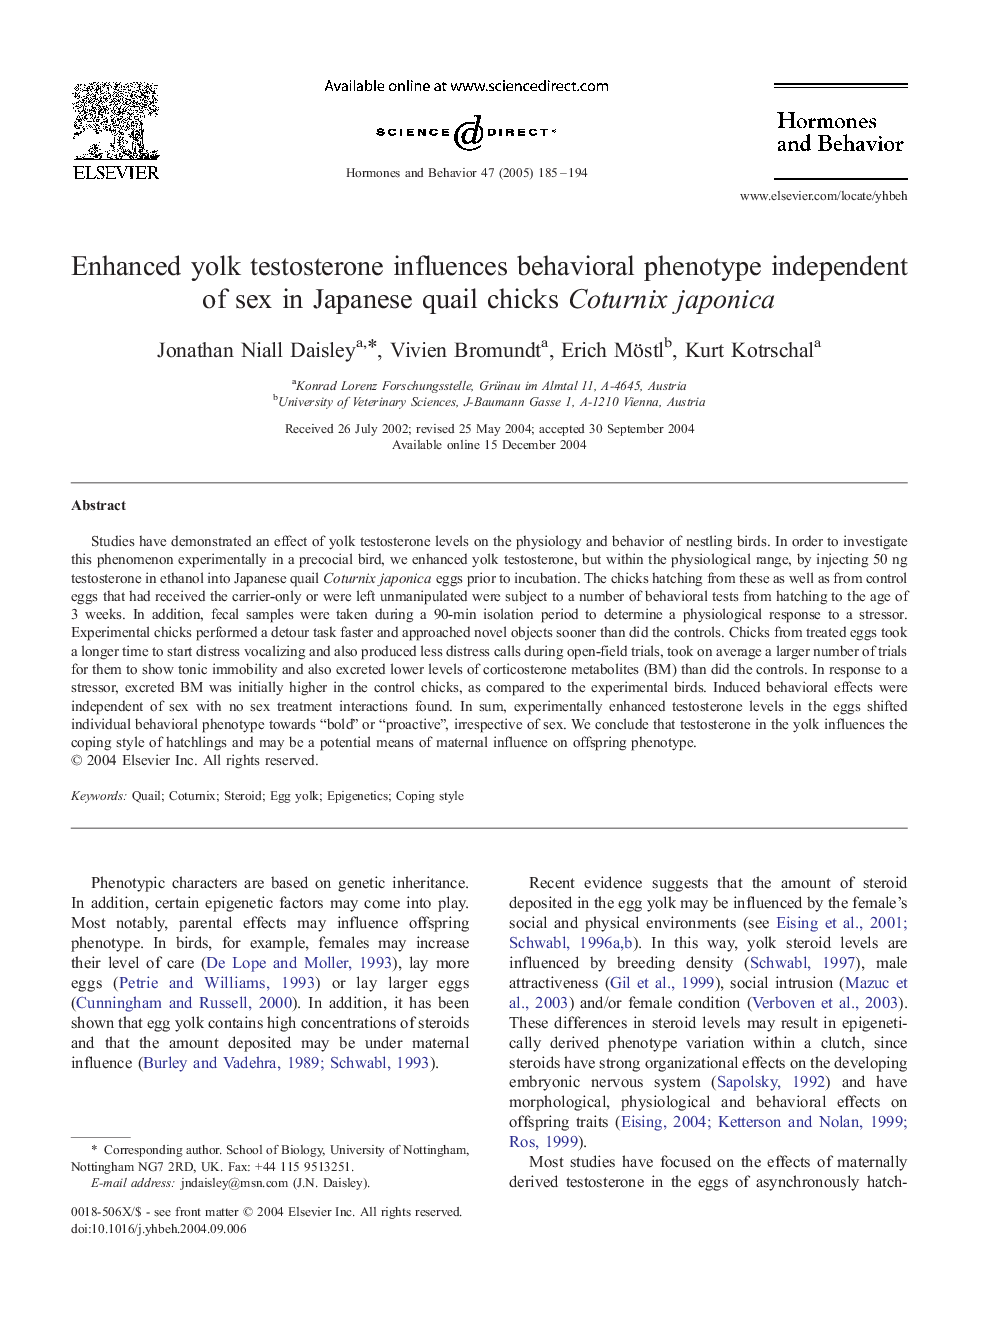 Enhanced yolk testosterone influences behavioral phenotype independent of sex in Japanese quail chicks Coturnix japonica